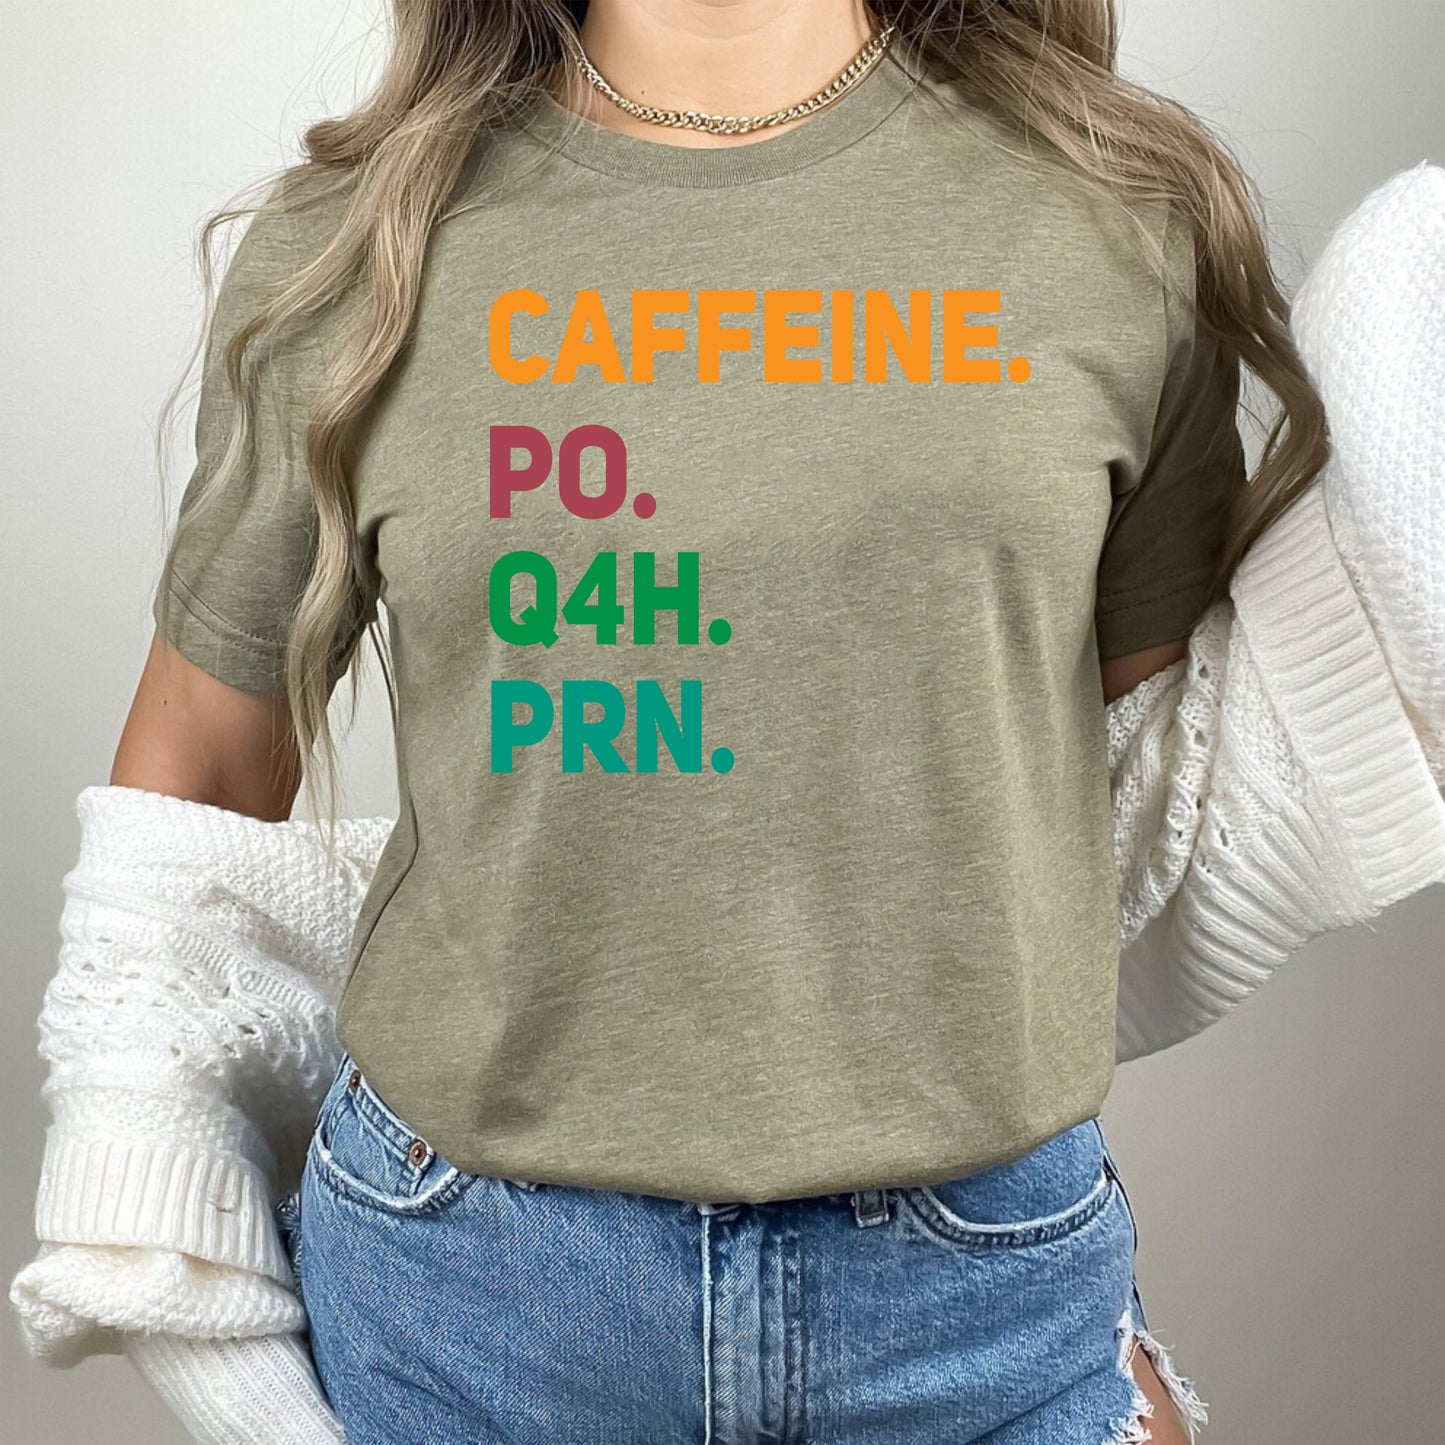 Caffeine PO Q4H PRN Nurse Life Healthcare Doctor Future Nurse T-Shirts